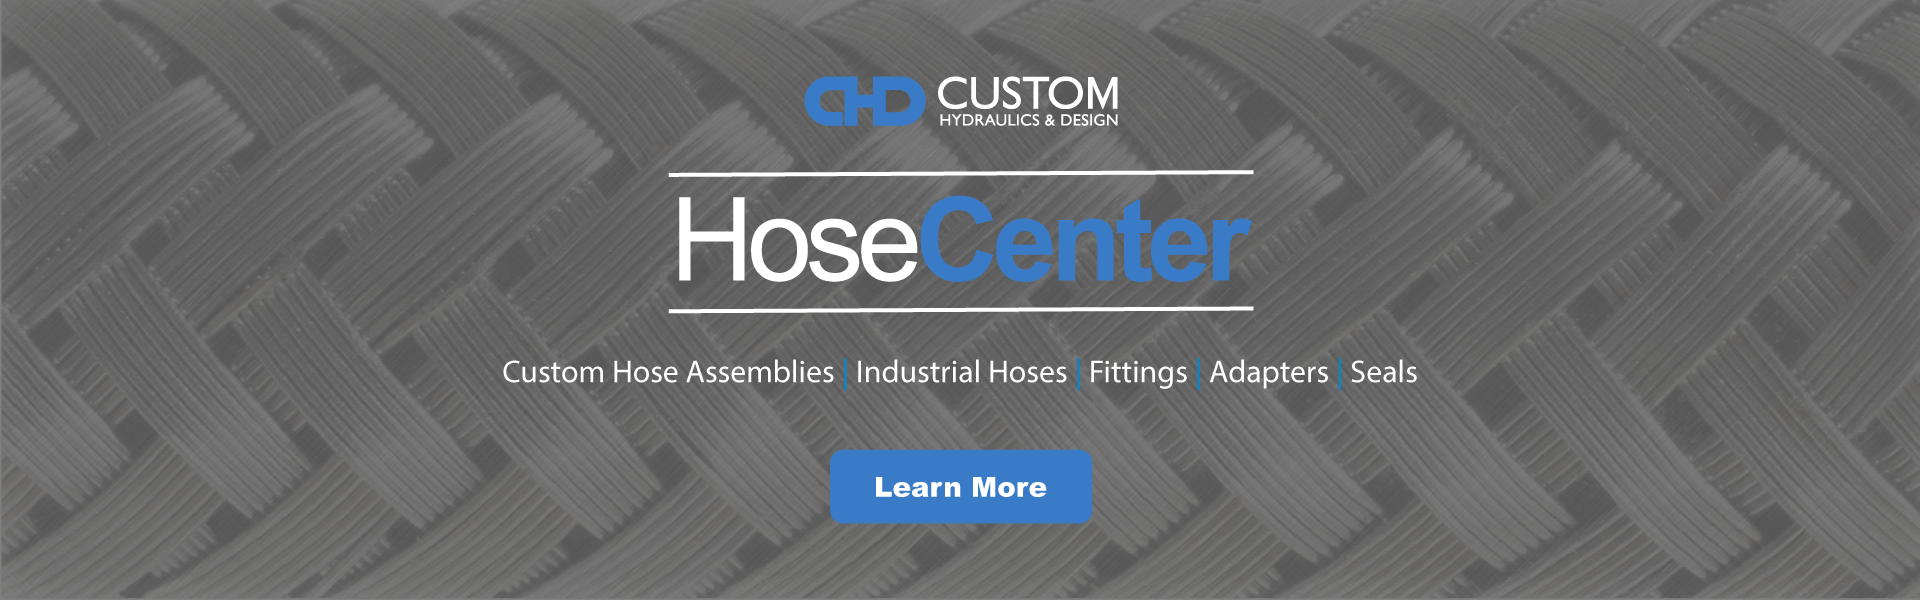 hydraulic hose repair charlotte, custom hose assemblies, industrial hoses, fittings, adapters, seals